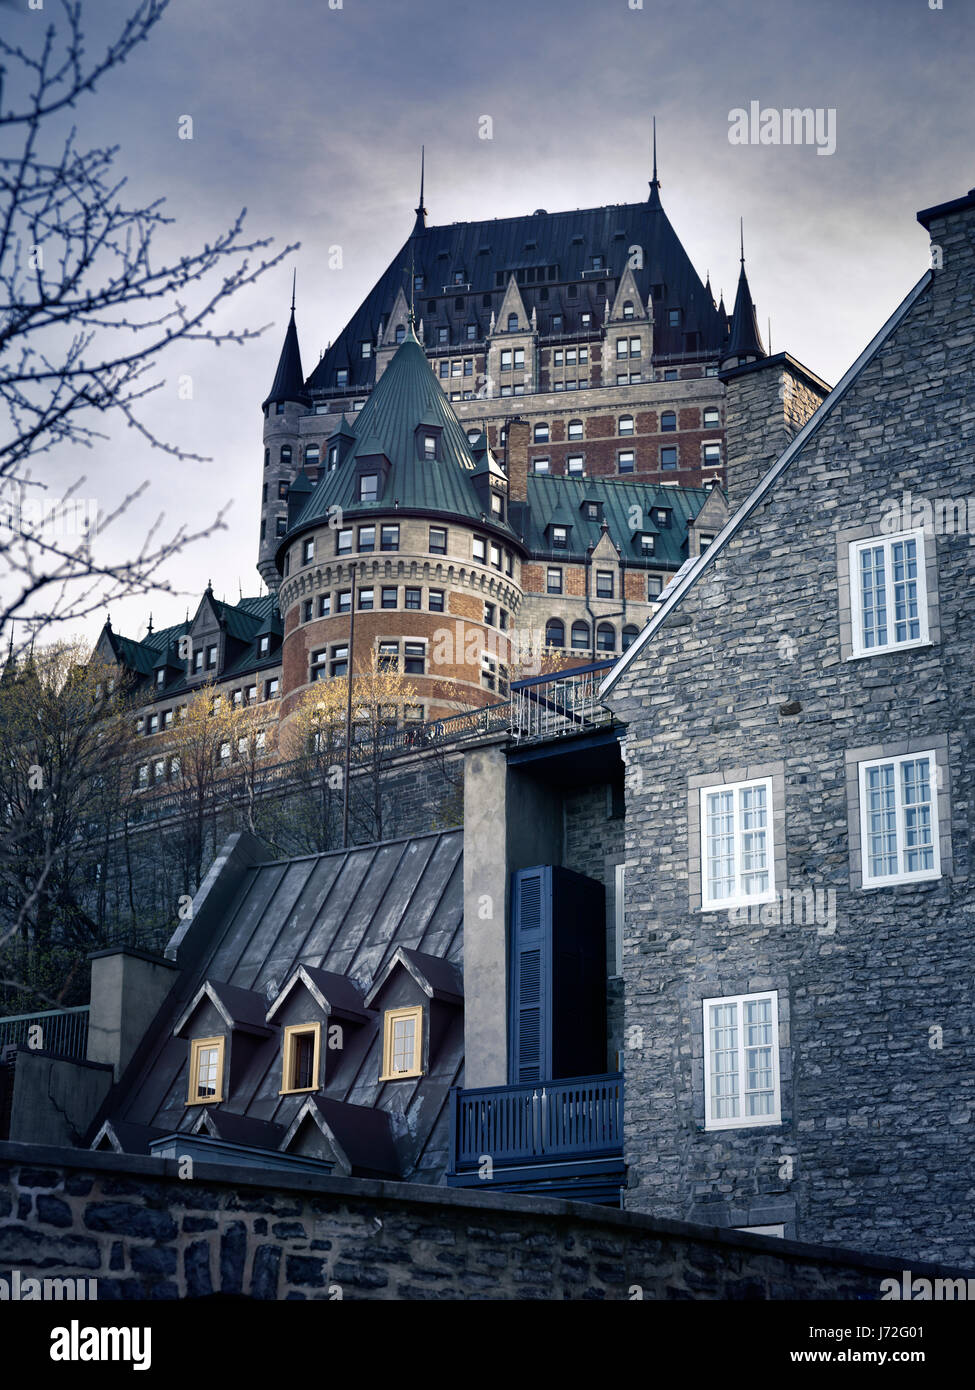 Lizenz erhältlich im MaximImages.com Fairmont Le Chateau Frontenac Castle Luxury Grand Hotel Old Quebec City, Kanada Stockfoto